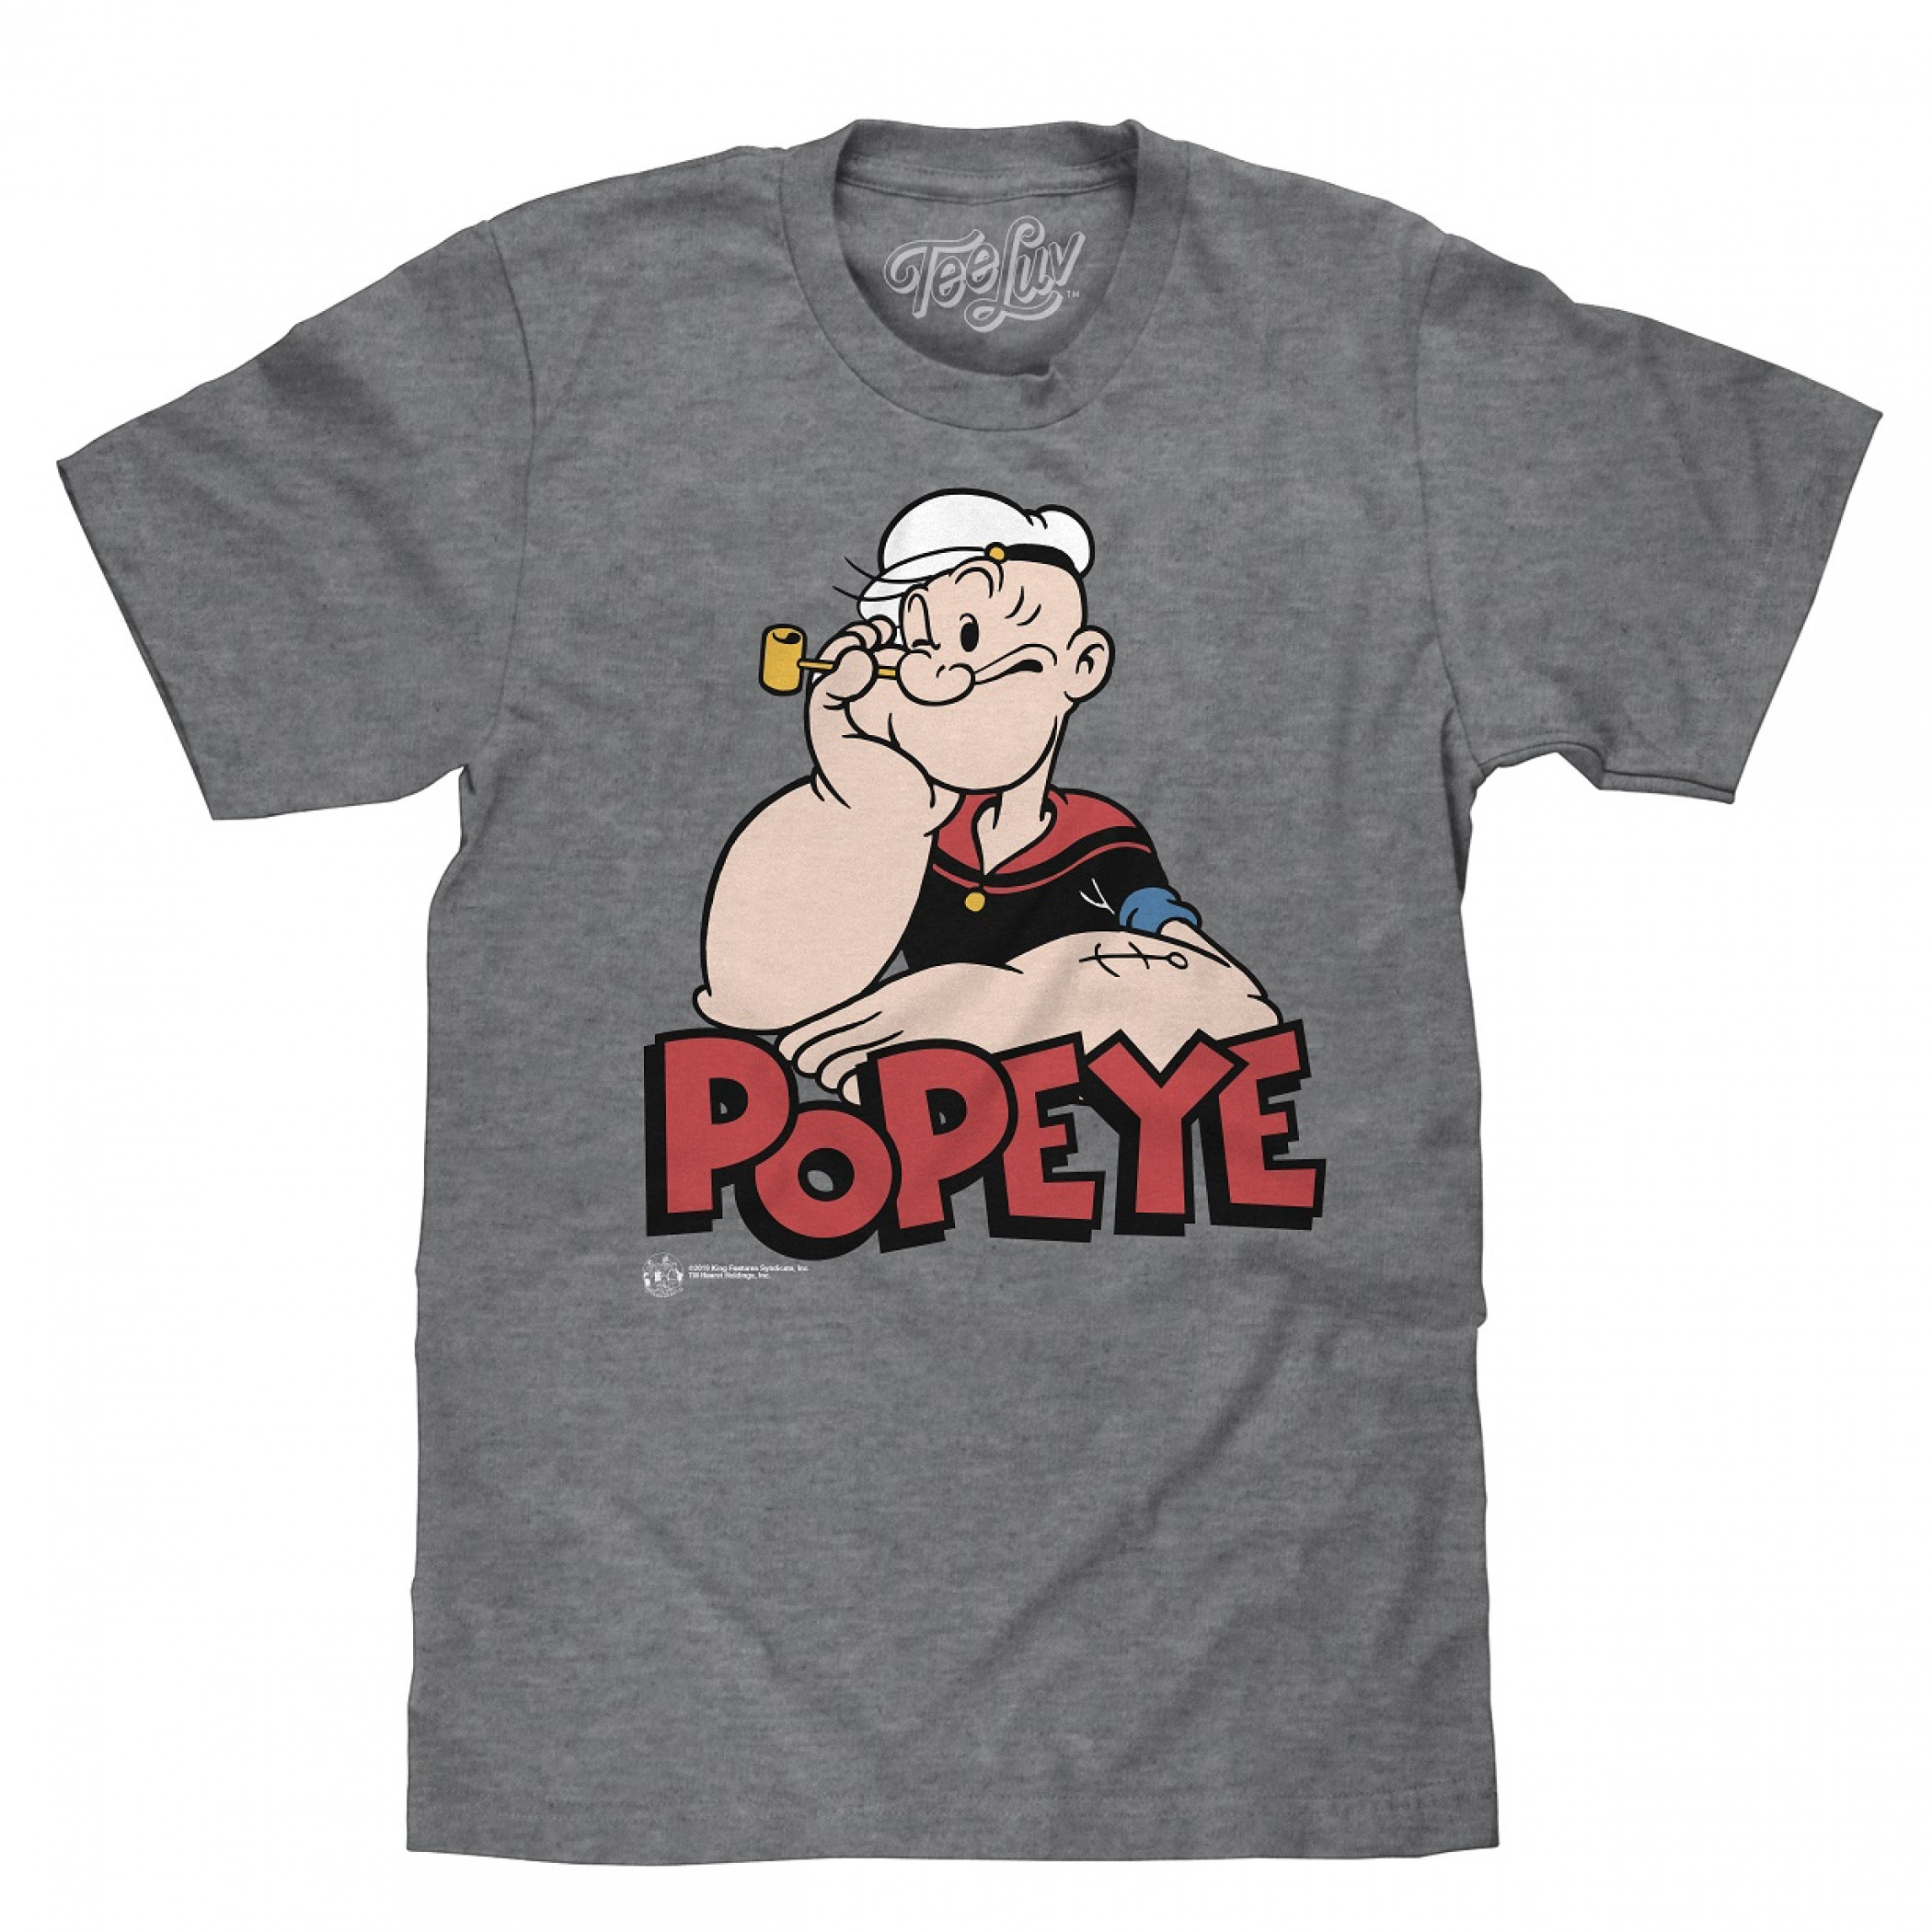 Popeye The Sailor Man Character T-Shirt